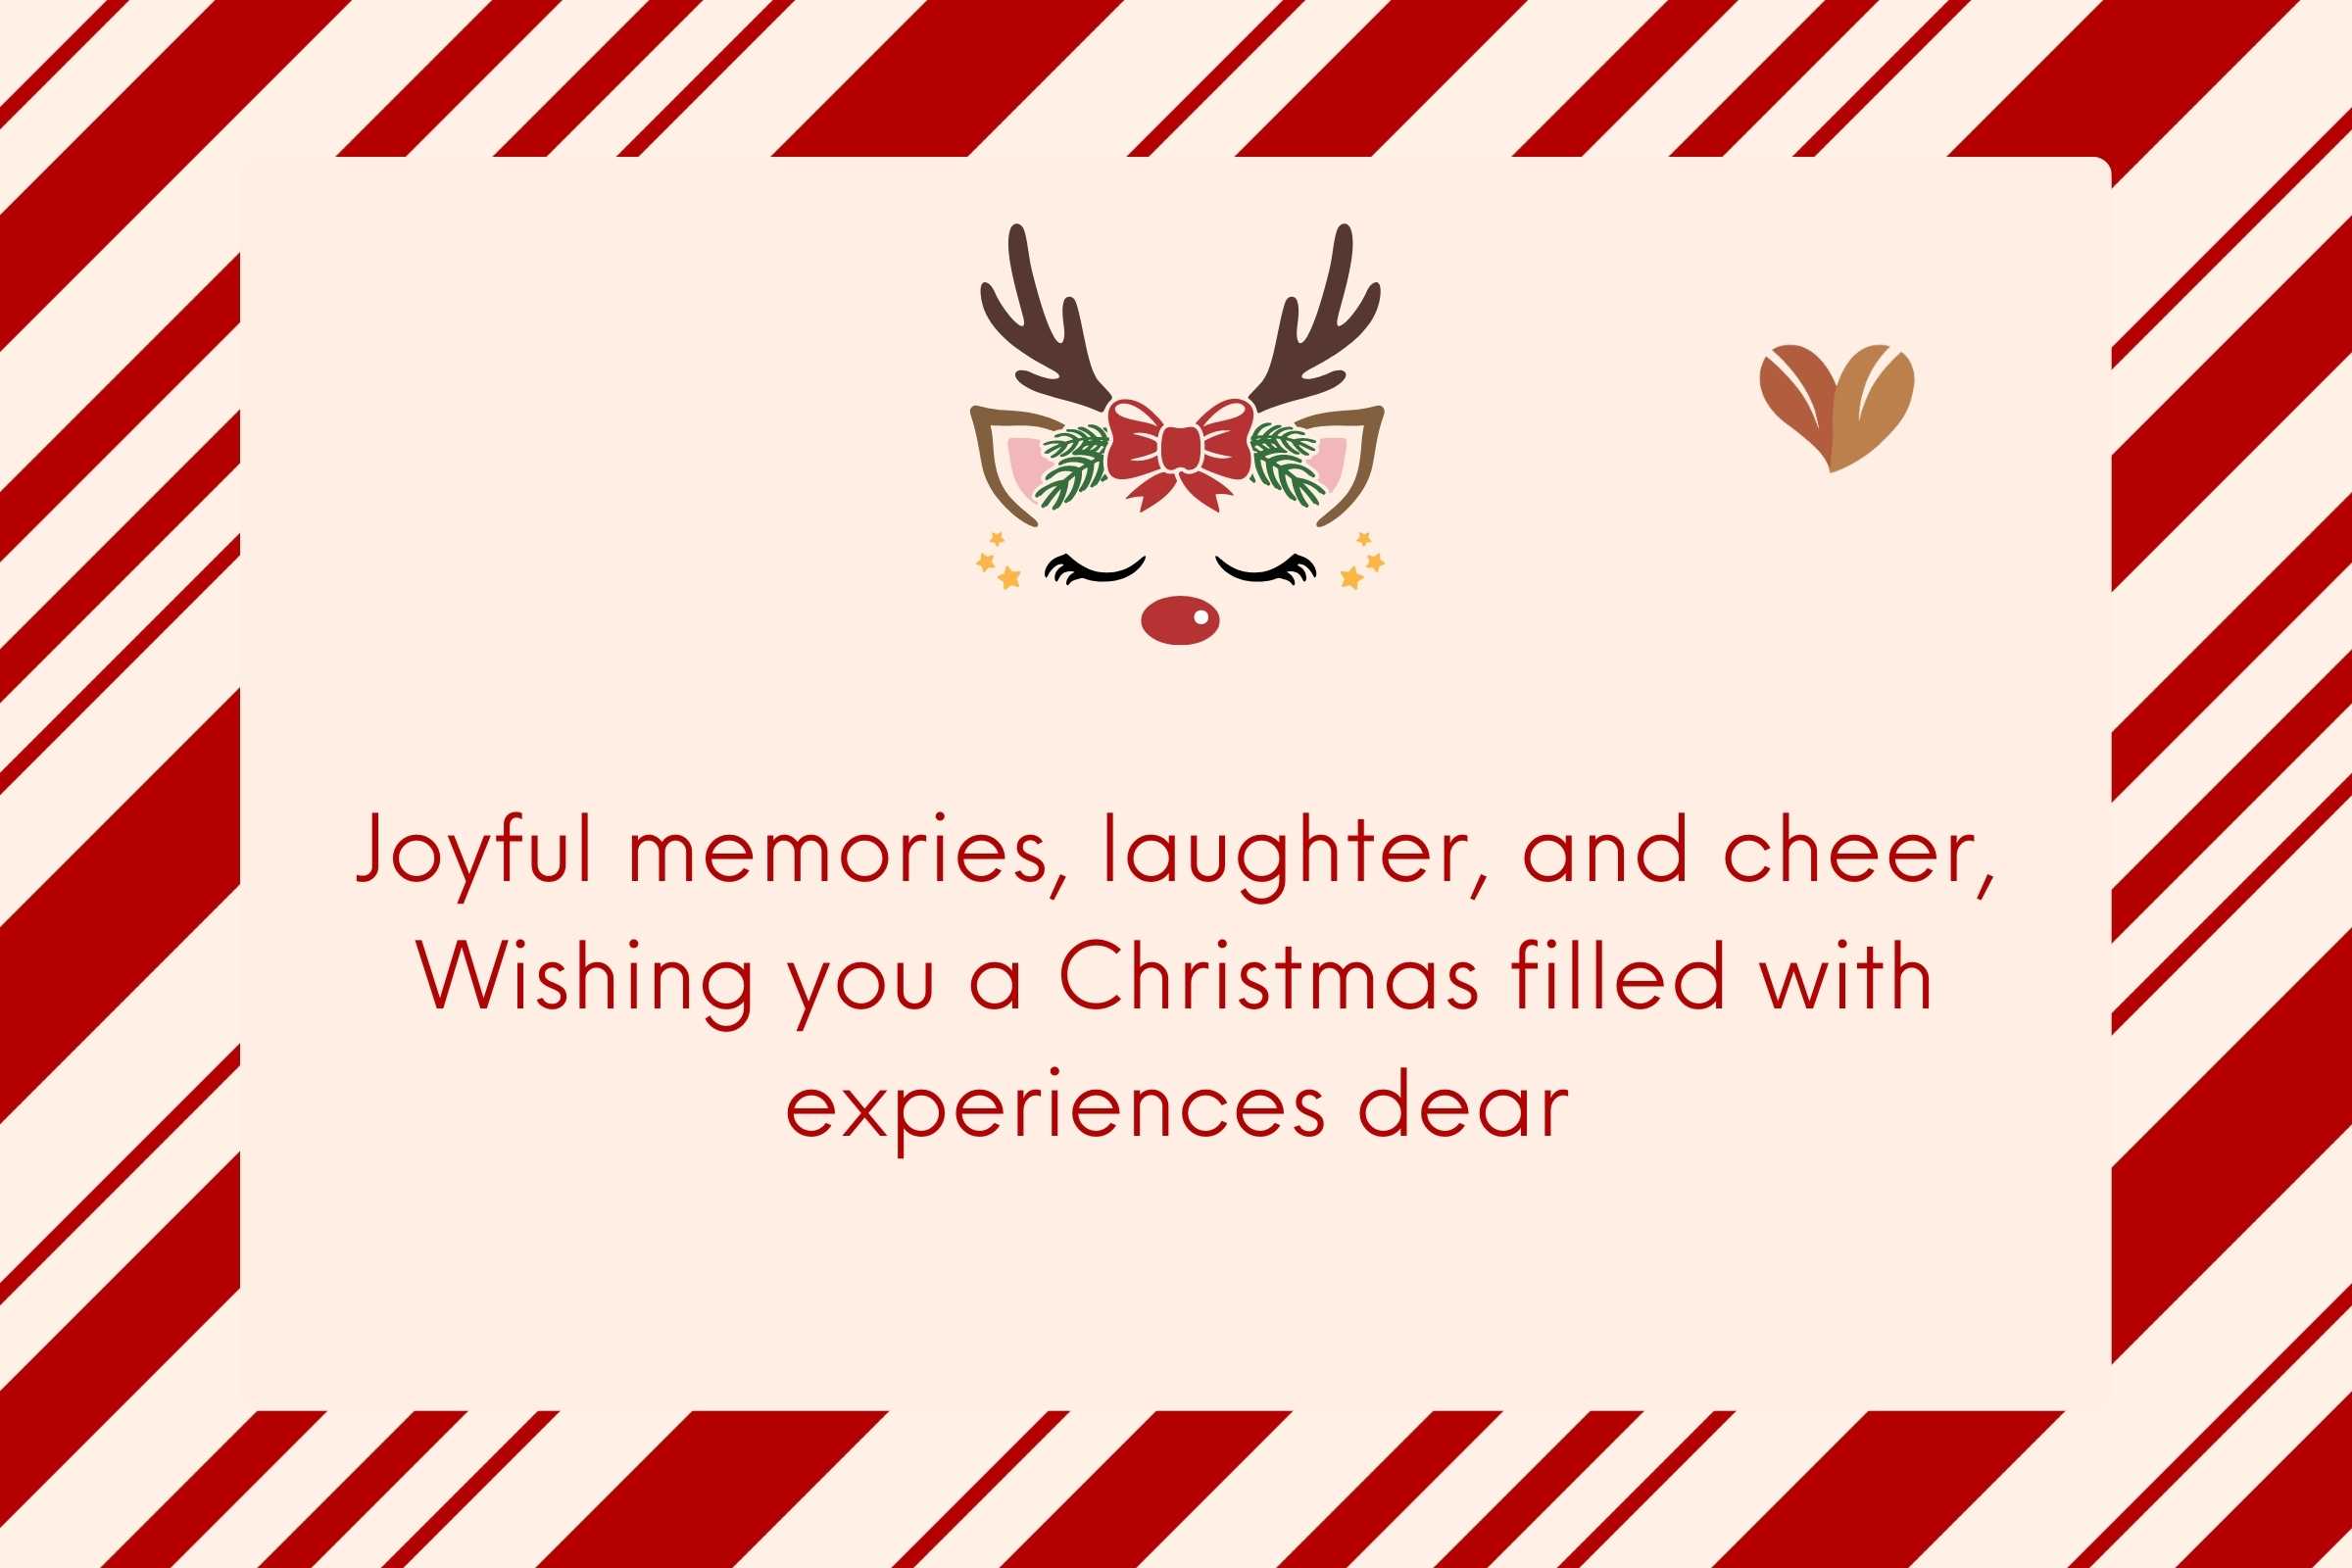 Christmas card verses - wishing you a Christmas with joyful memories